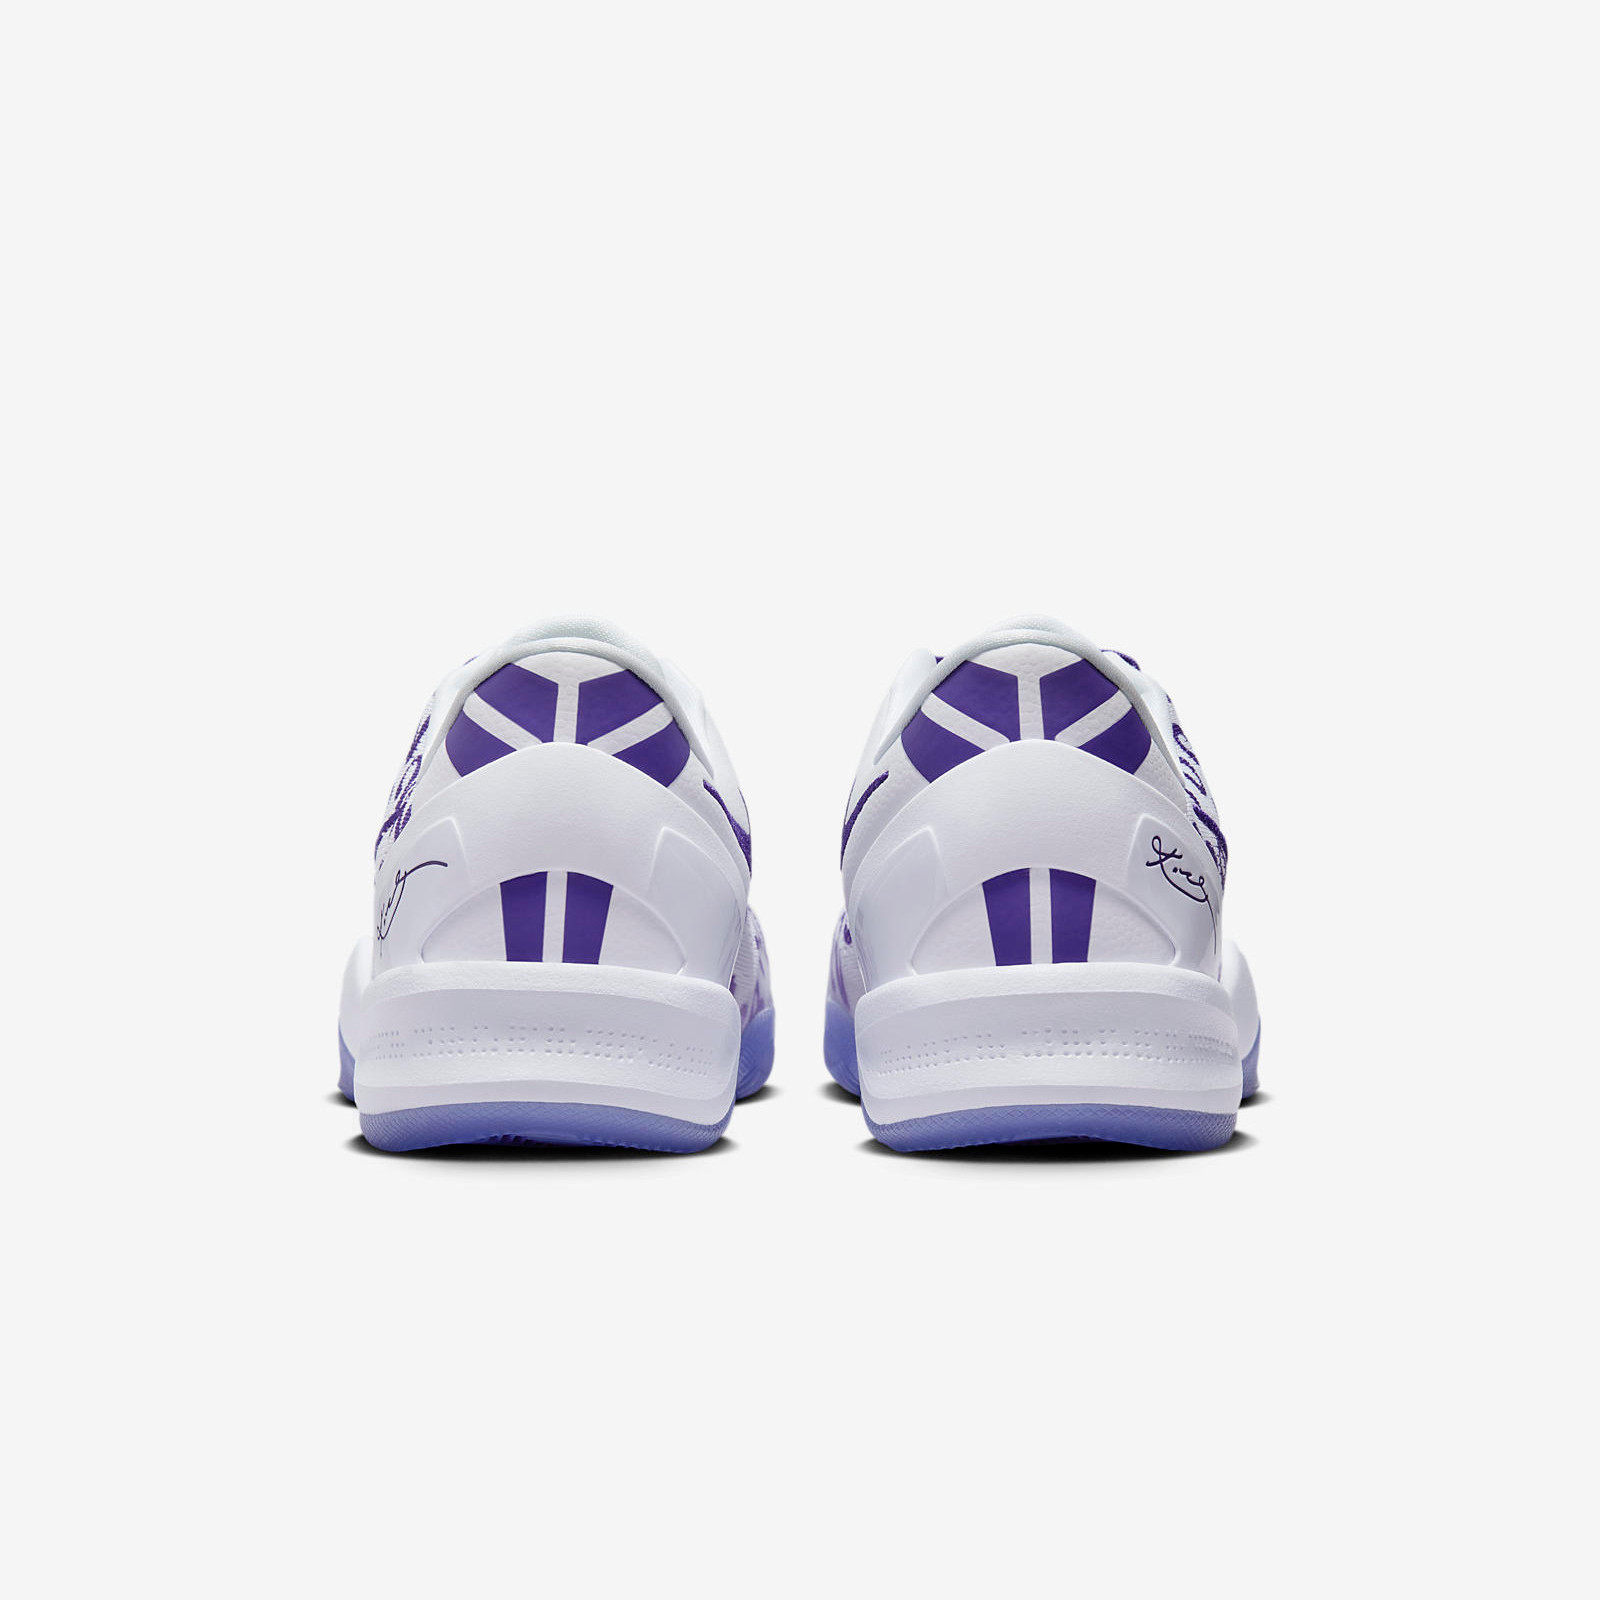 Nike Kobe 8 Protro
« Court Purple »